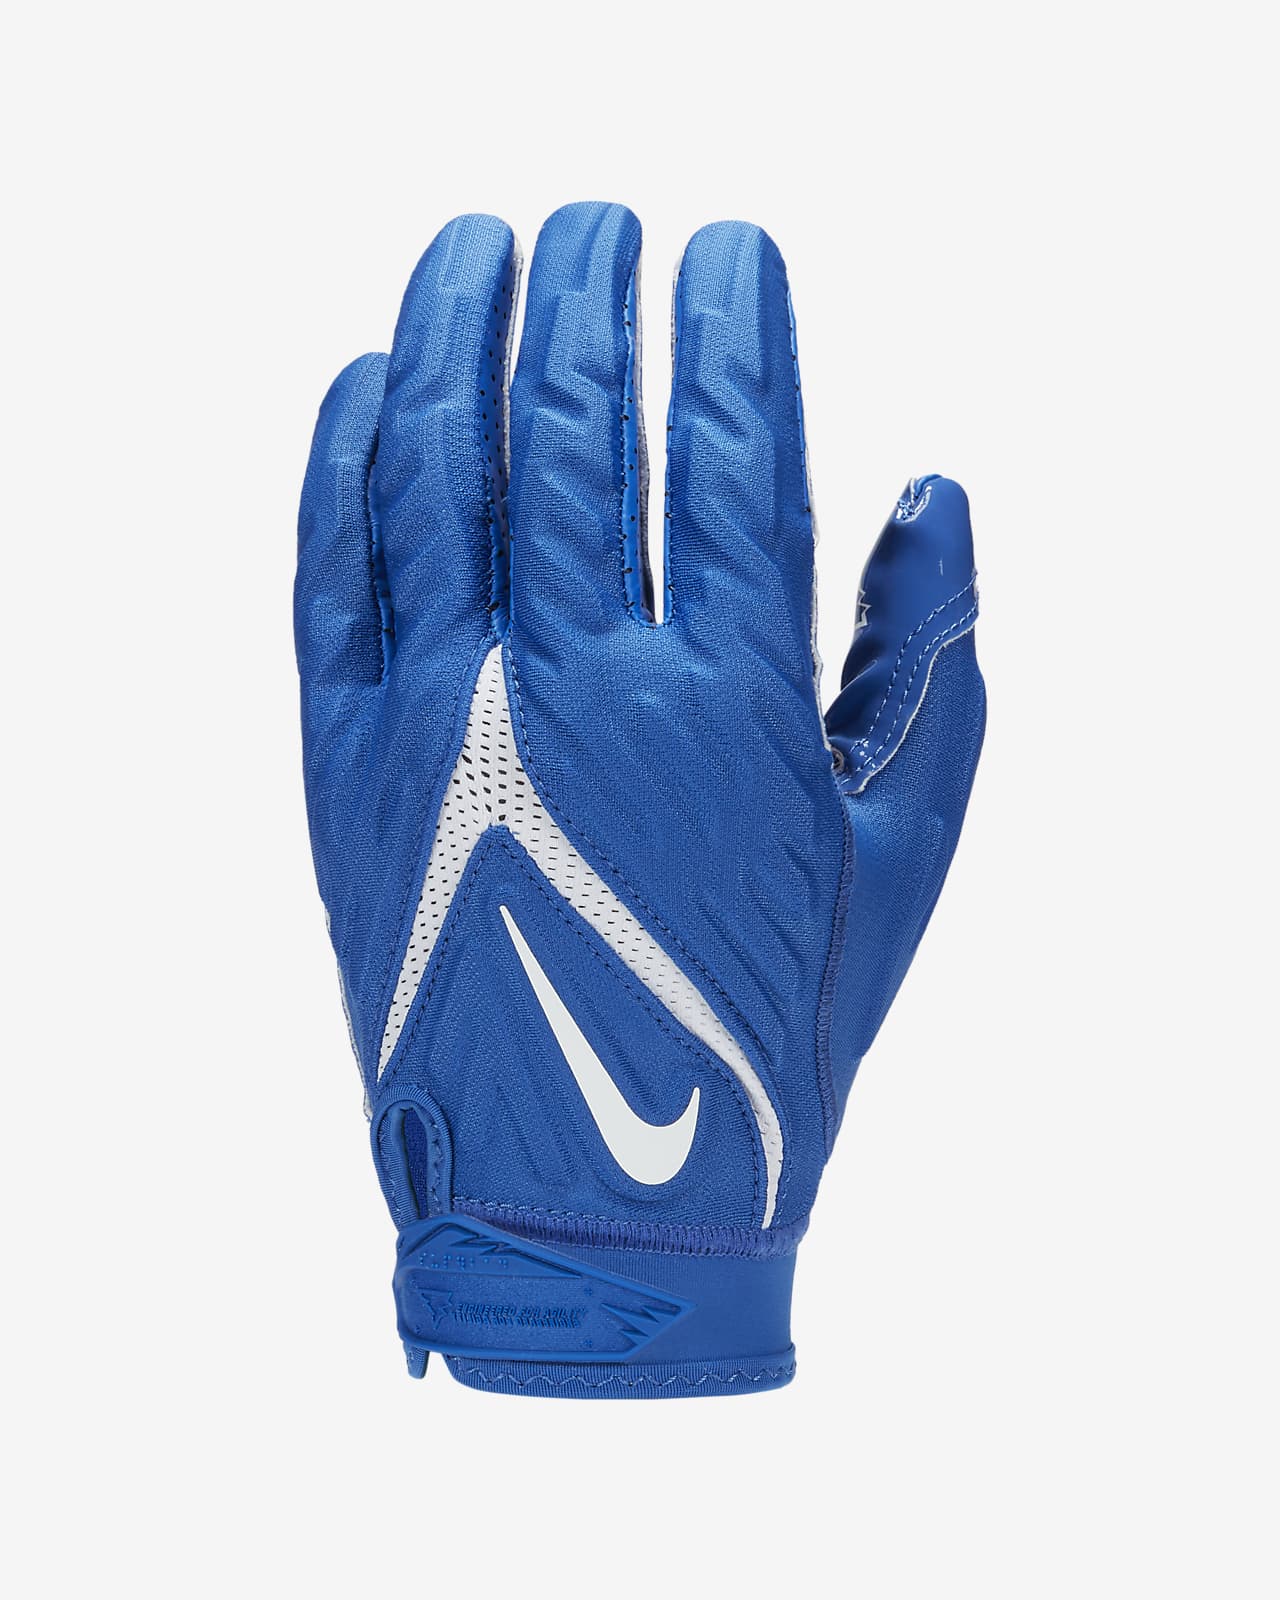 Superbad Football Gloves 1 Pair N5KD4p 